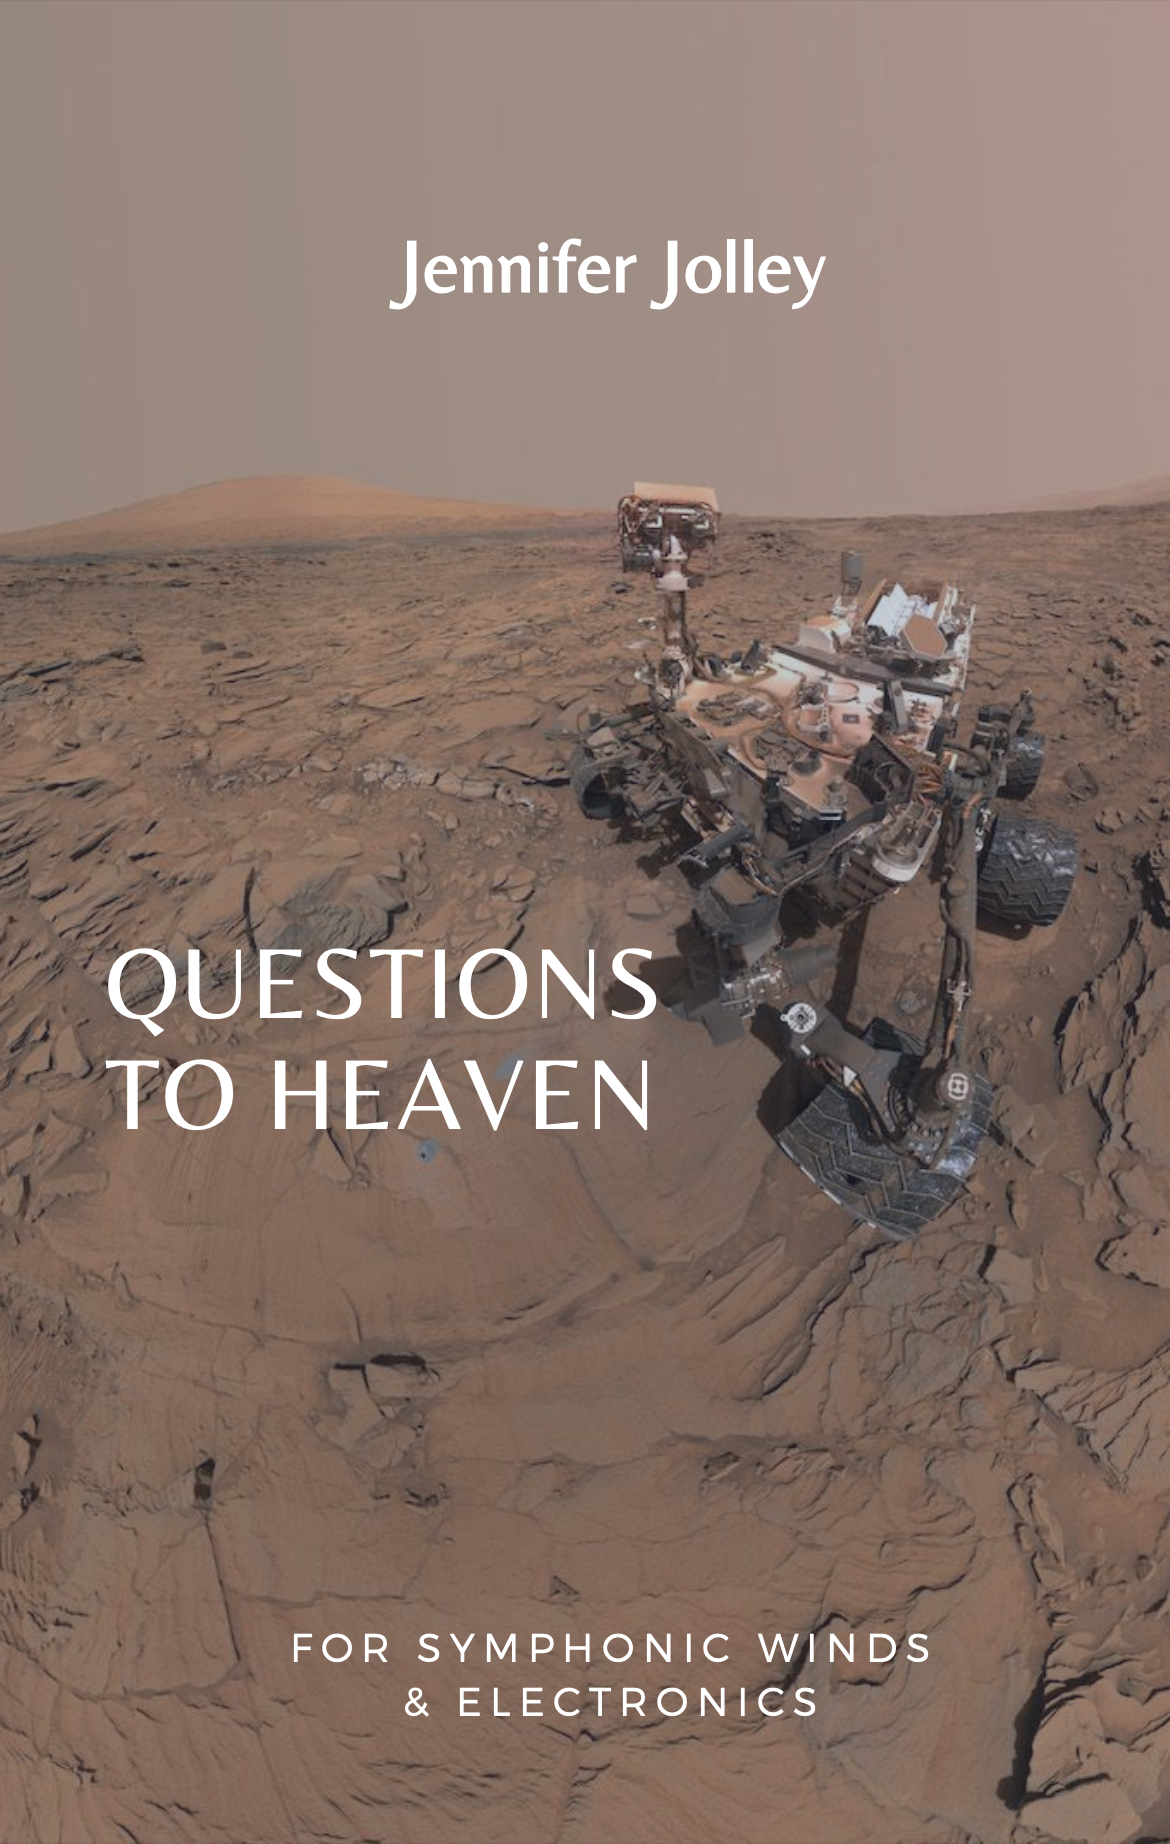 Questions To Heaven by Jennifer Jolley